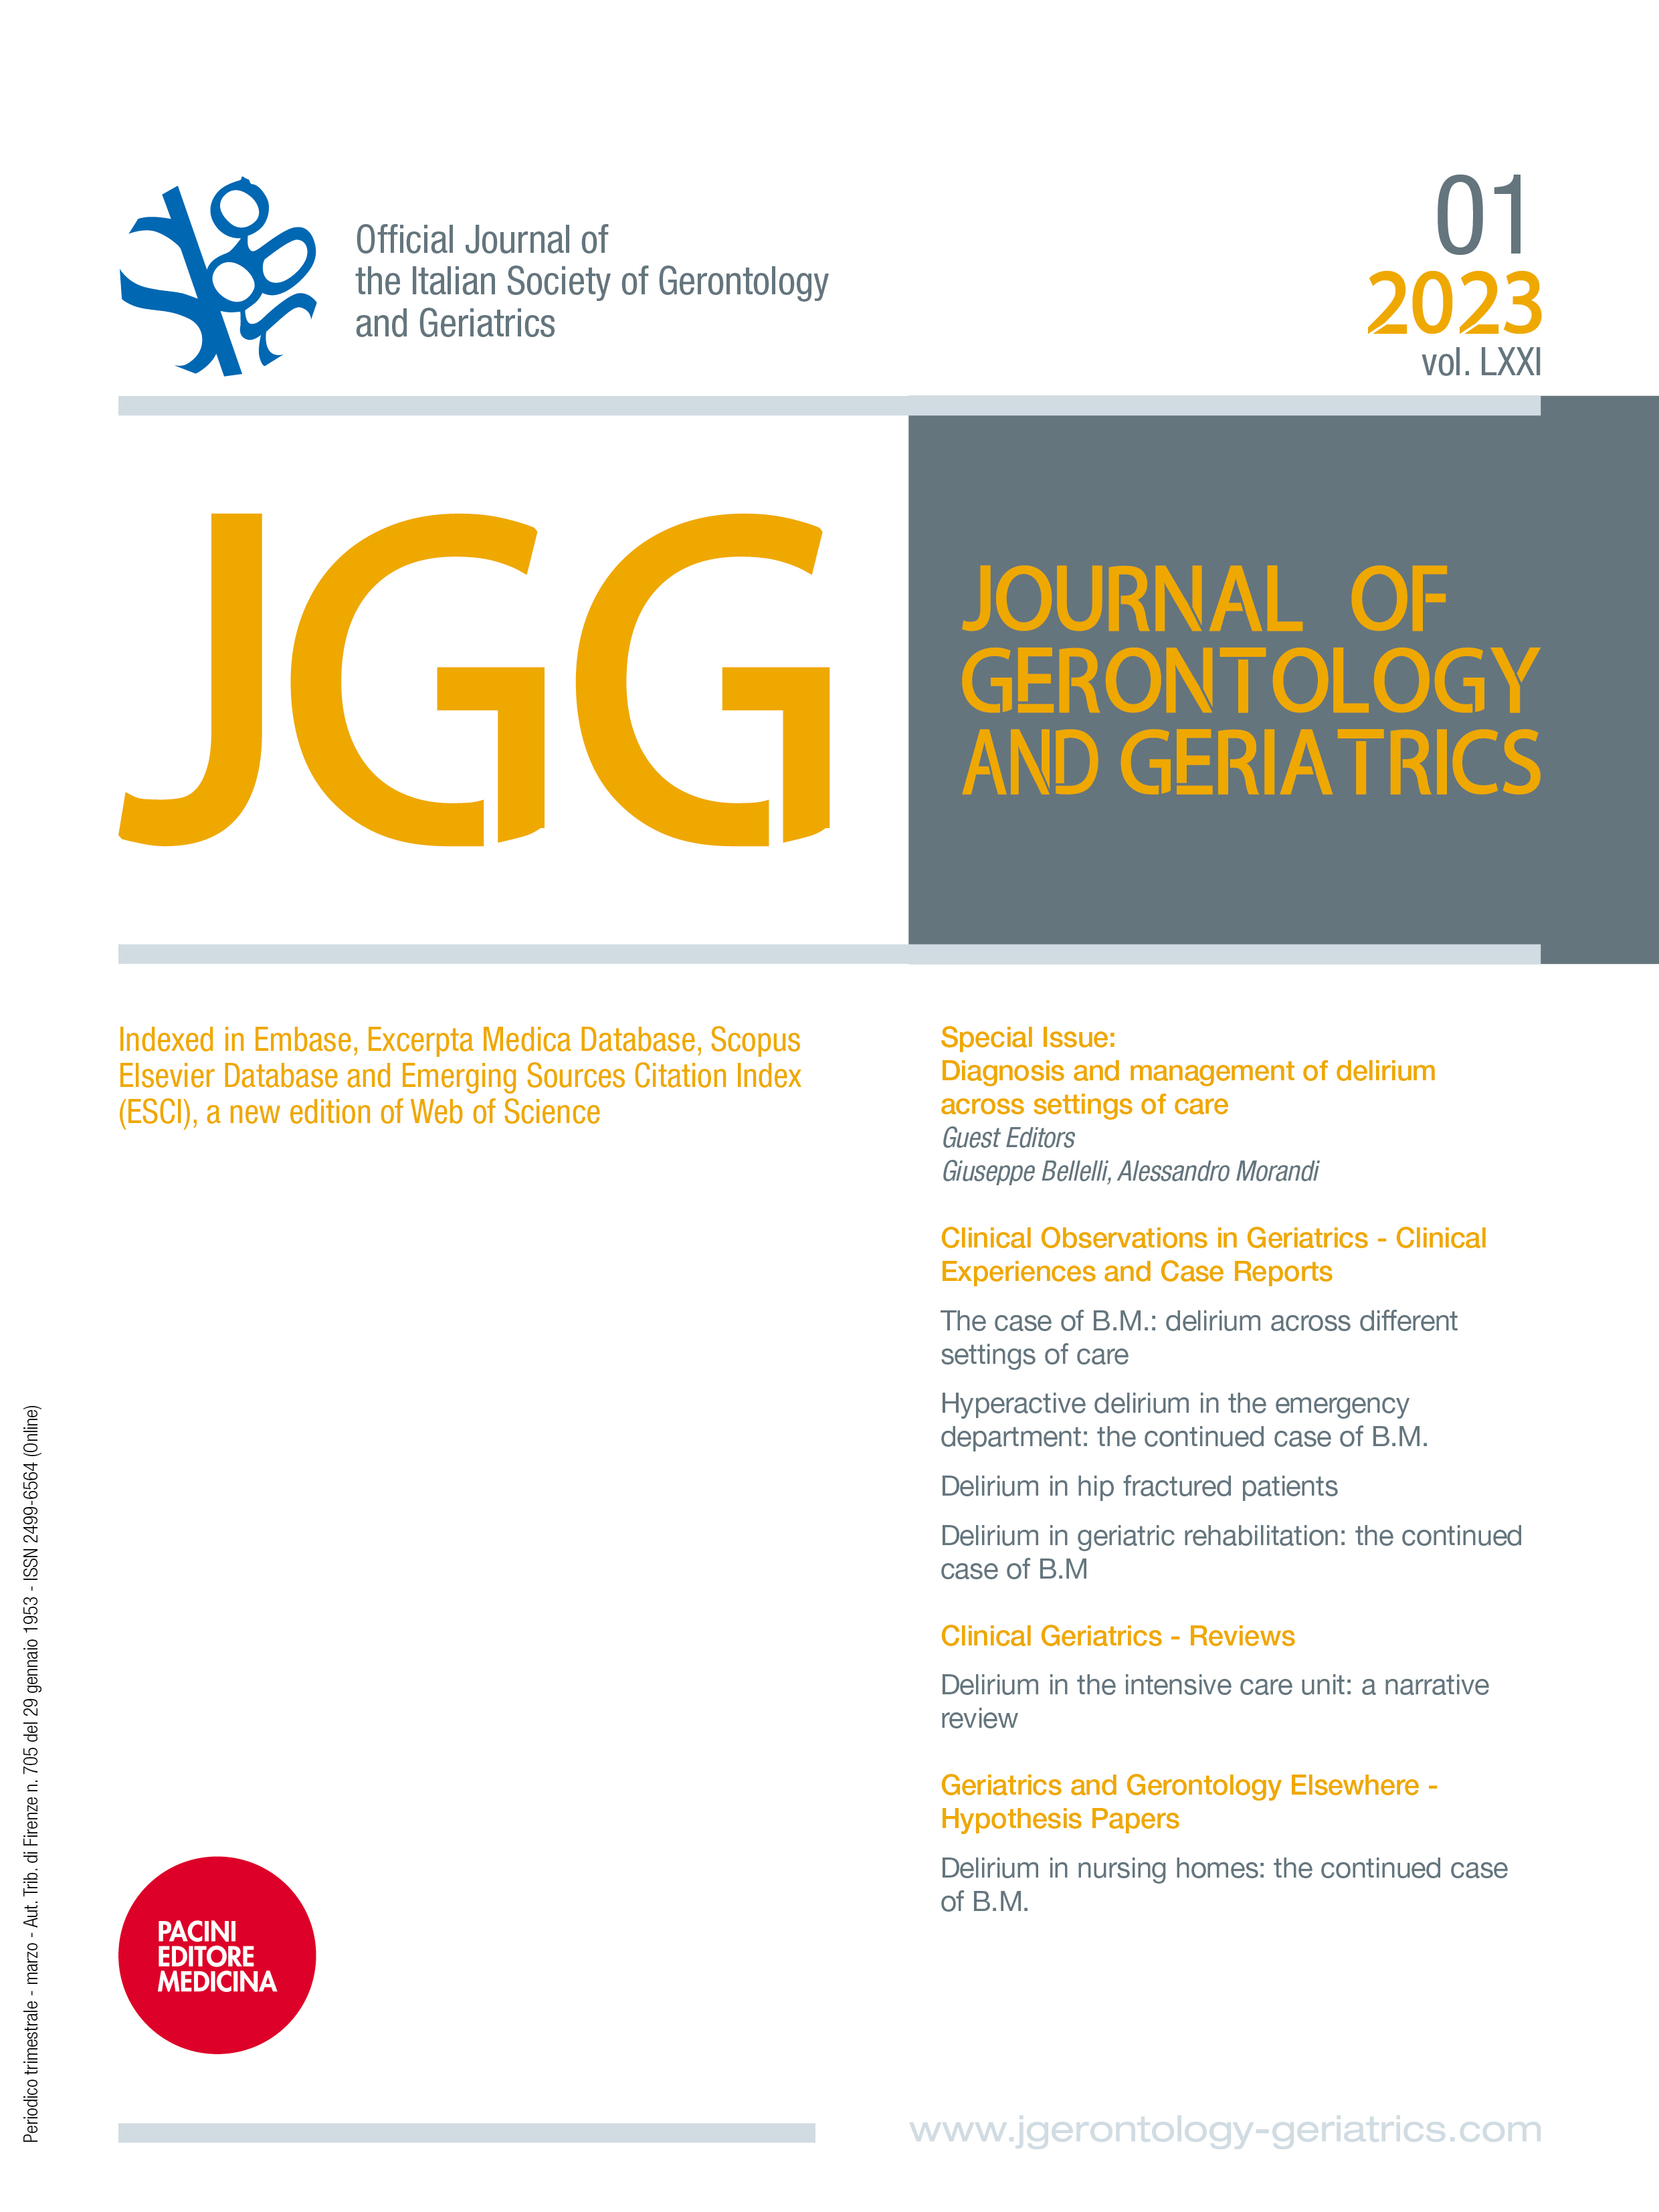 https://www.jgerontology-geriatrics.com/public/journals/1/cover_issue_35_en_US.jpg